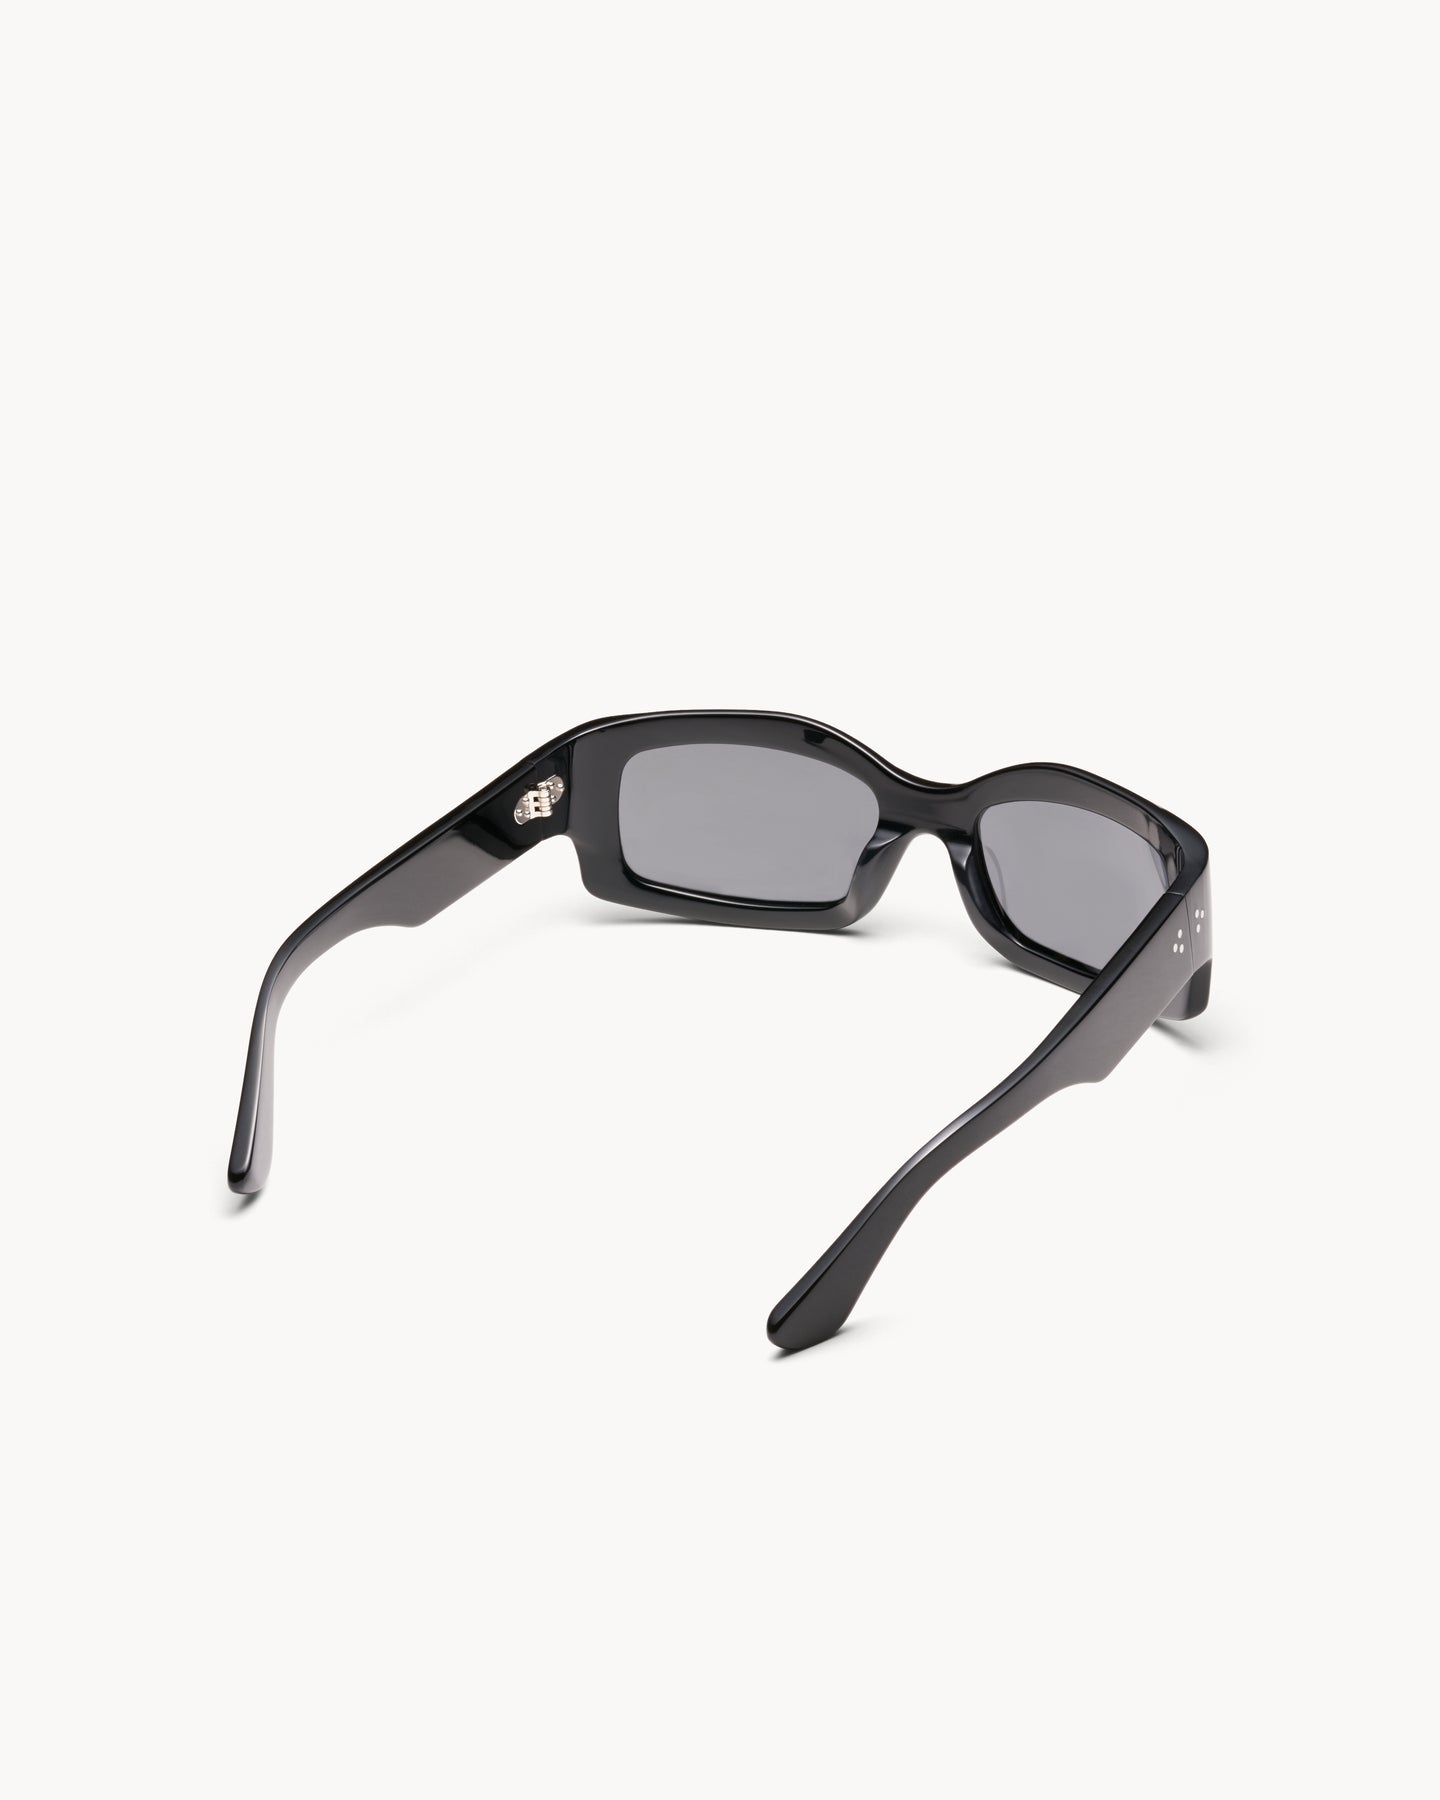 Port Tanger Addis Sunglasses in Black Acetate and Black Lenses 3